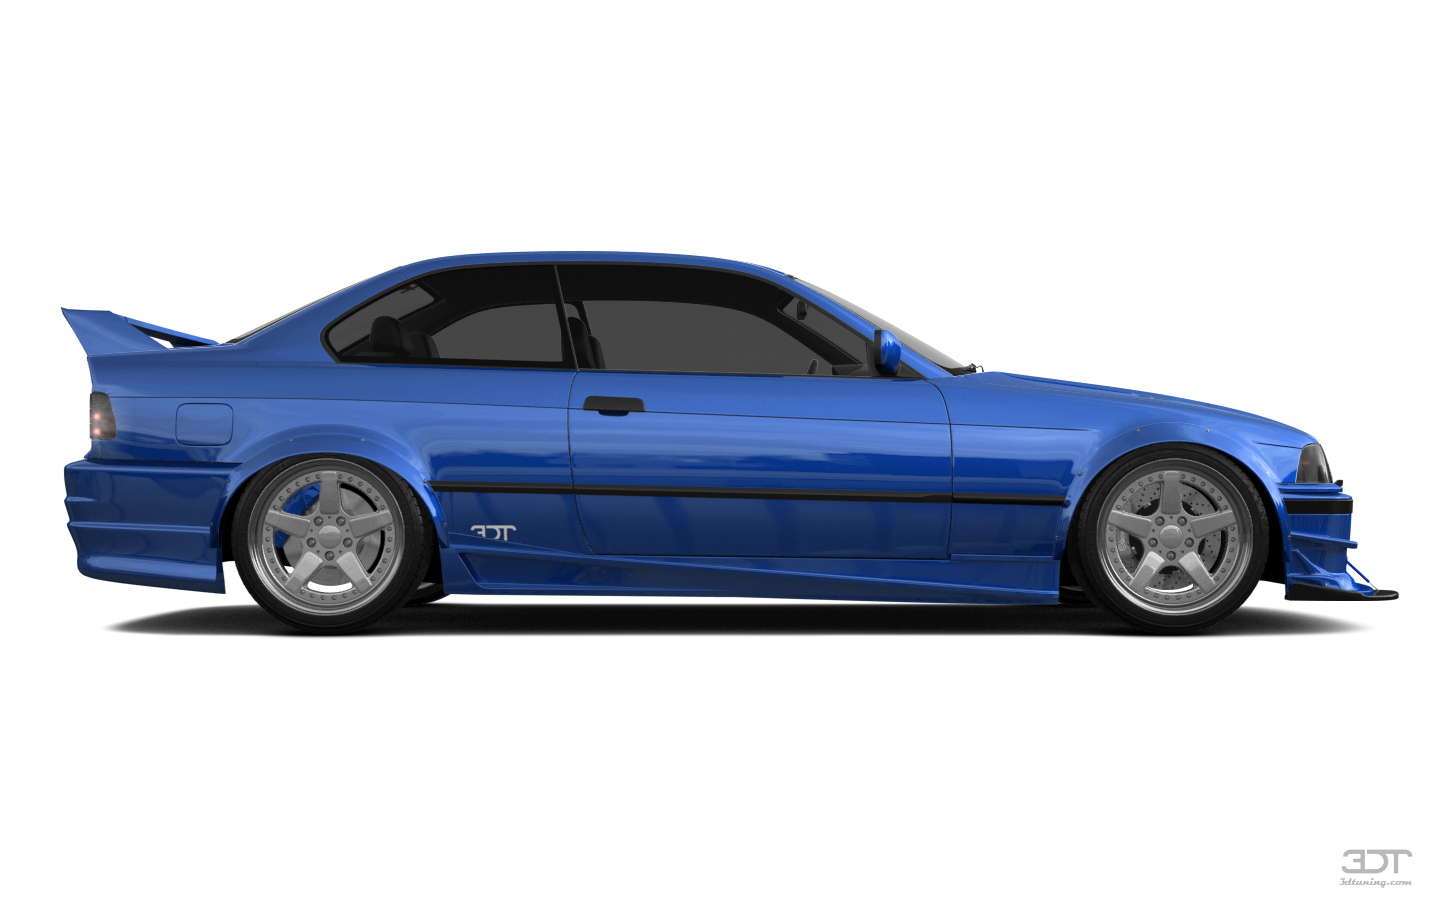 BMW 3 Series'93